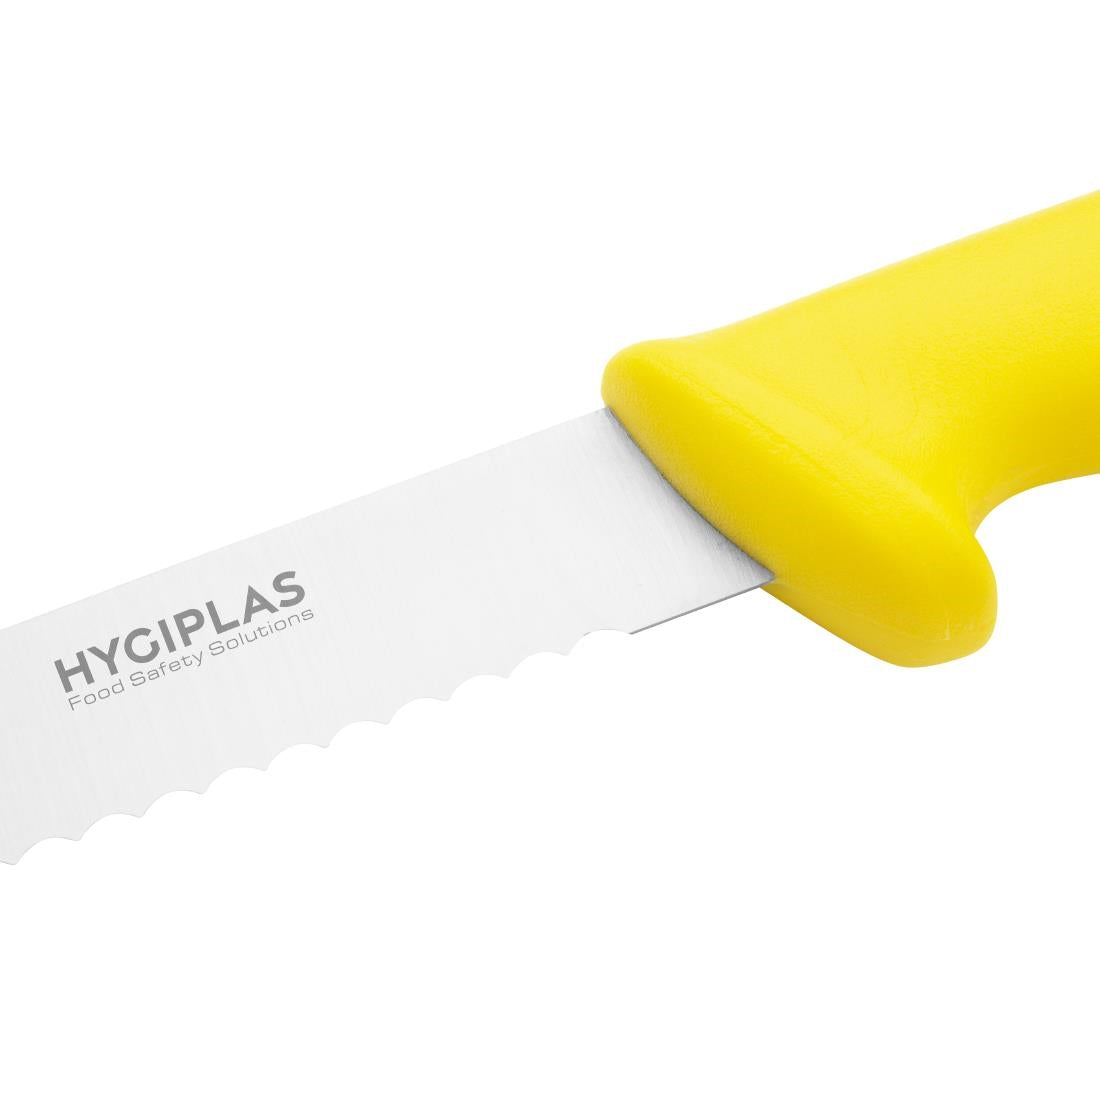 C810 Hygiplas Serrated Slicer Yellow 25.5cm JD Catering Equipment Solutions Ltd